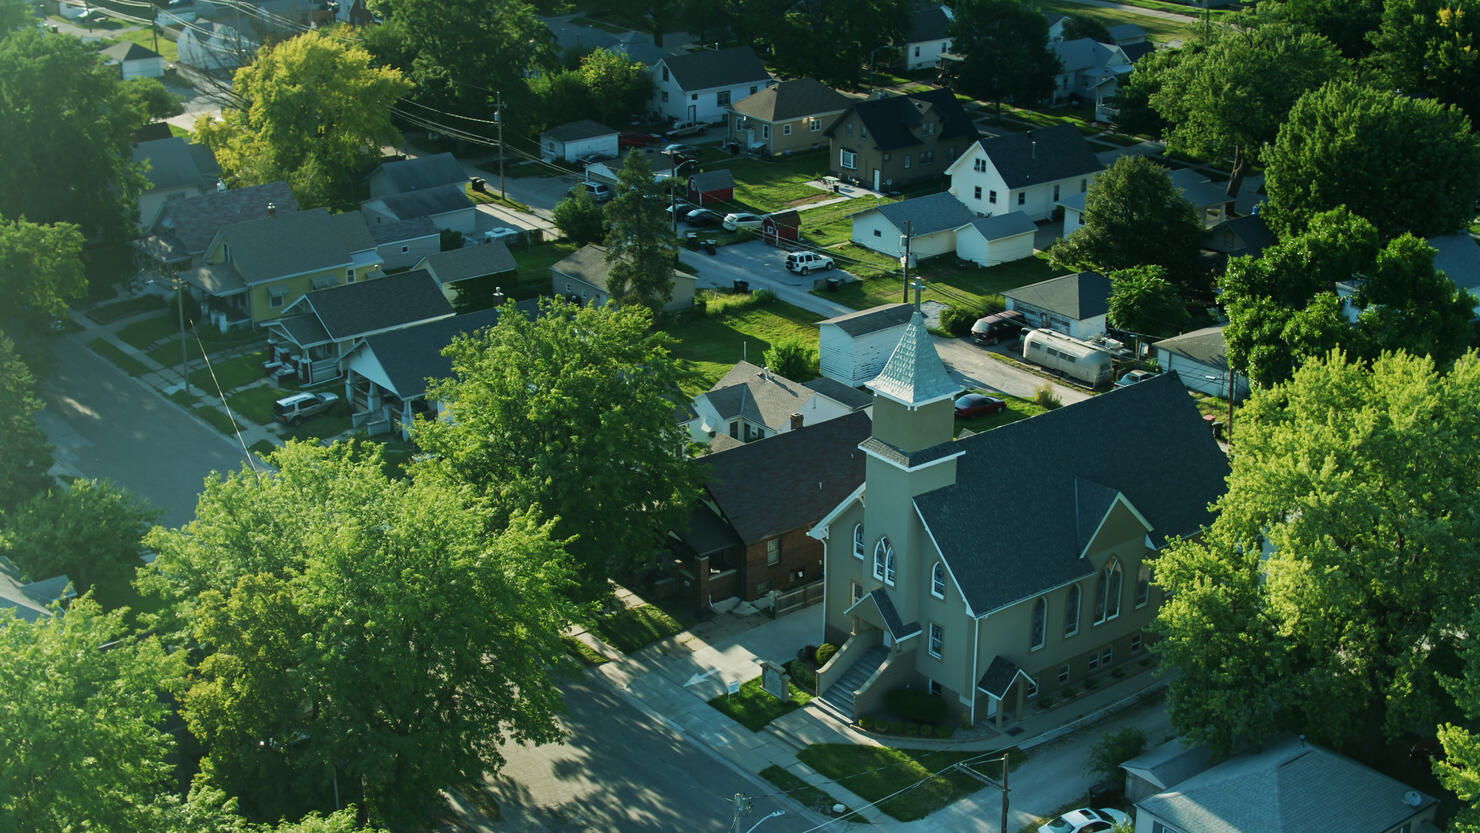 Church and Houses in Lincoln, Nebraska - Aerial